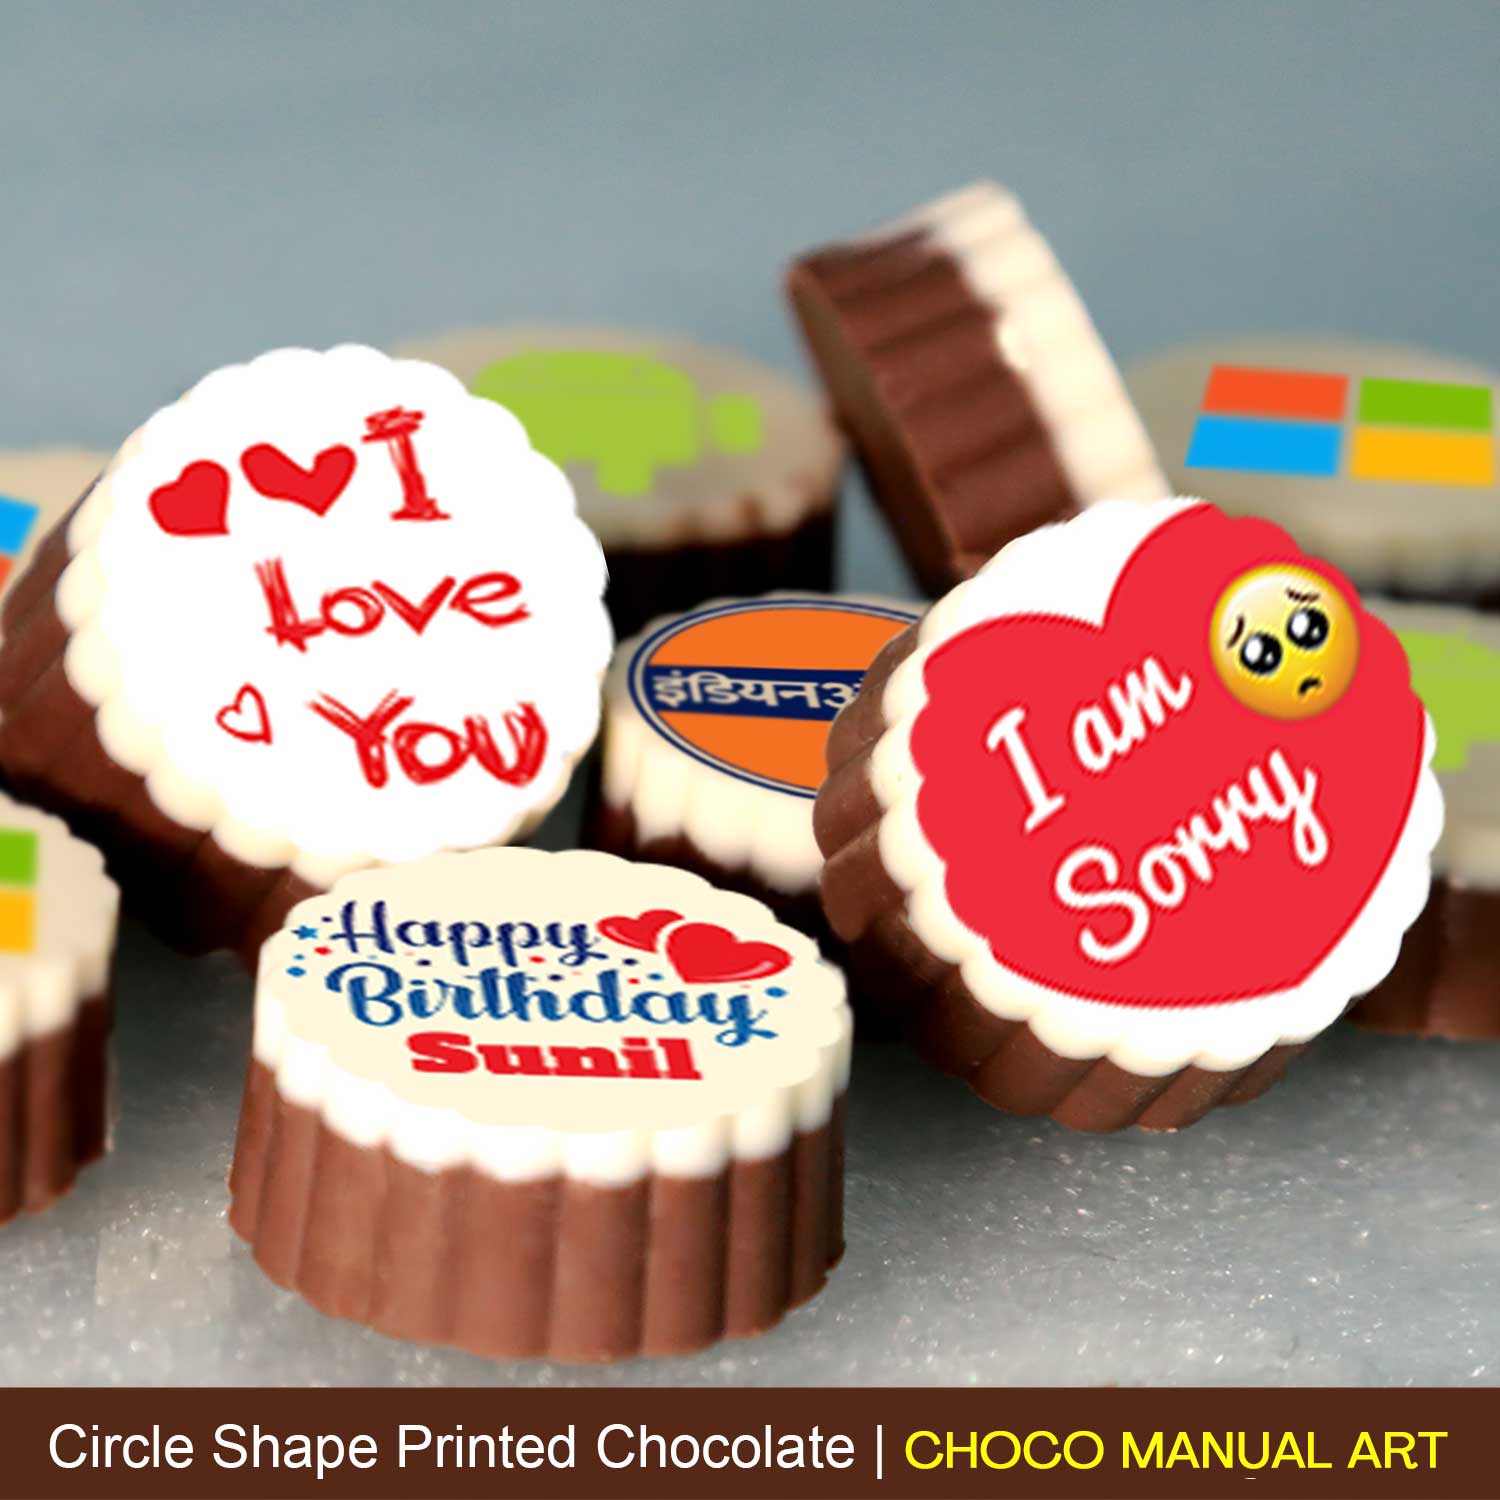 Sorry Chocolate Gifts - Choco ManualART